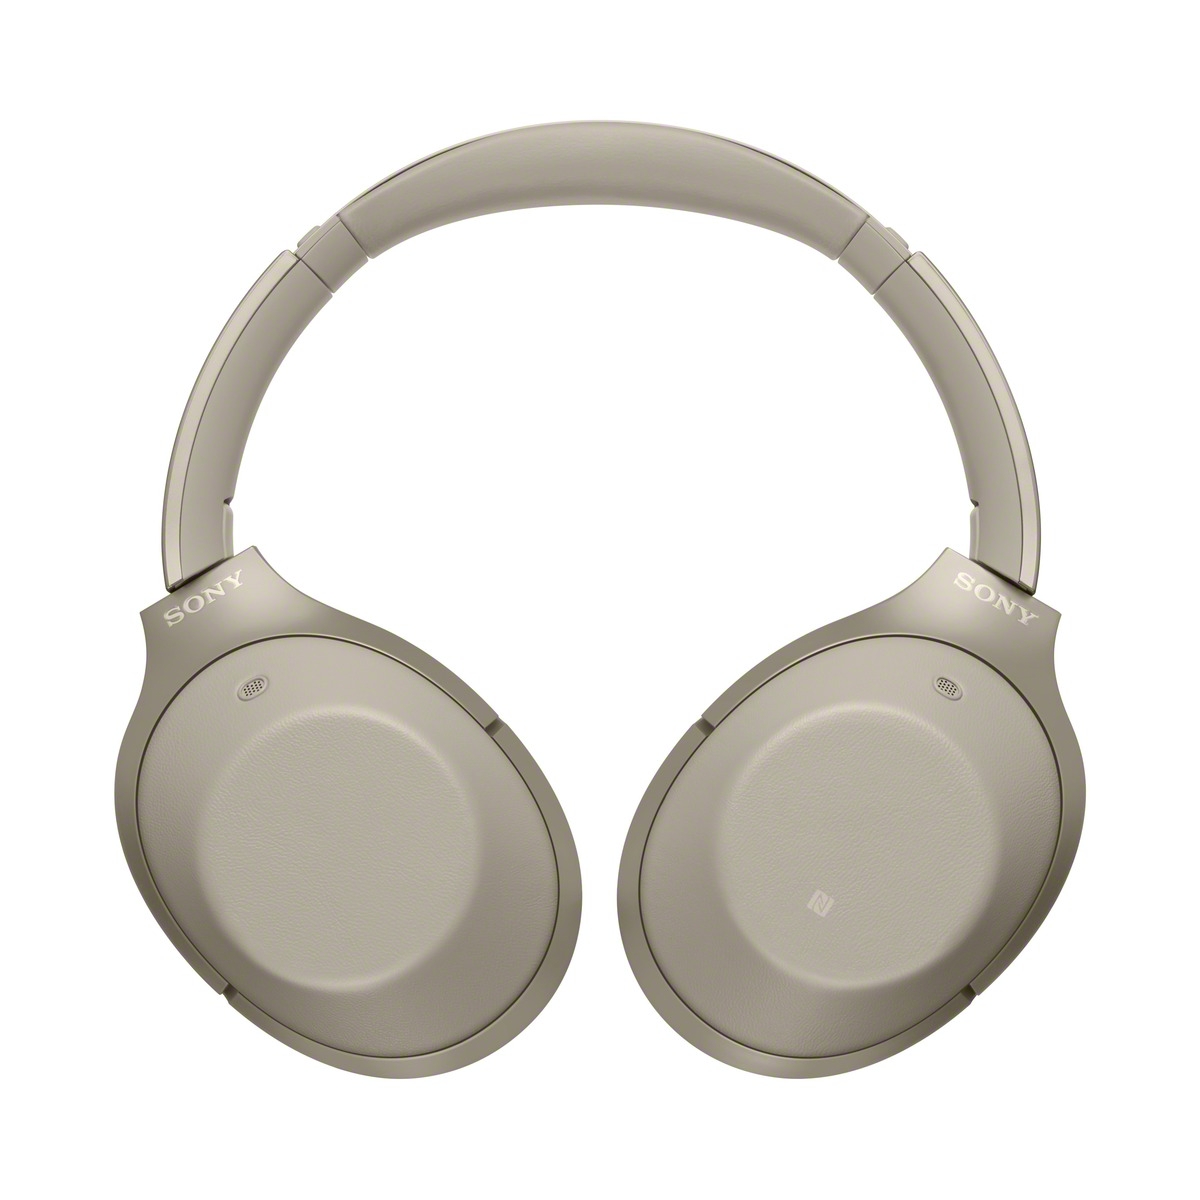 Sony MDR-1000X Wireless Bluetooth Noise Cancelling Hi-Fi Headphones | eBay